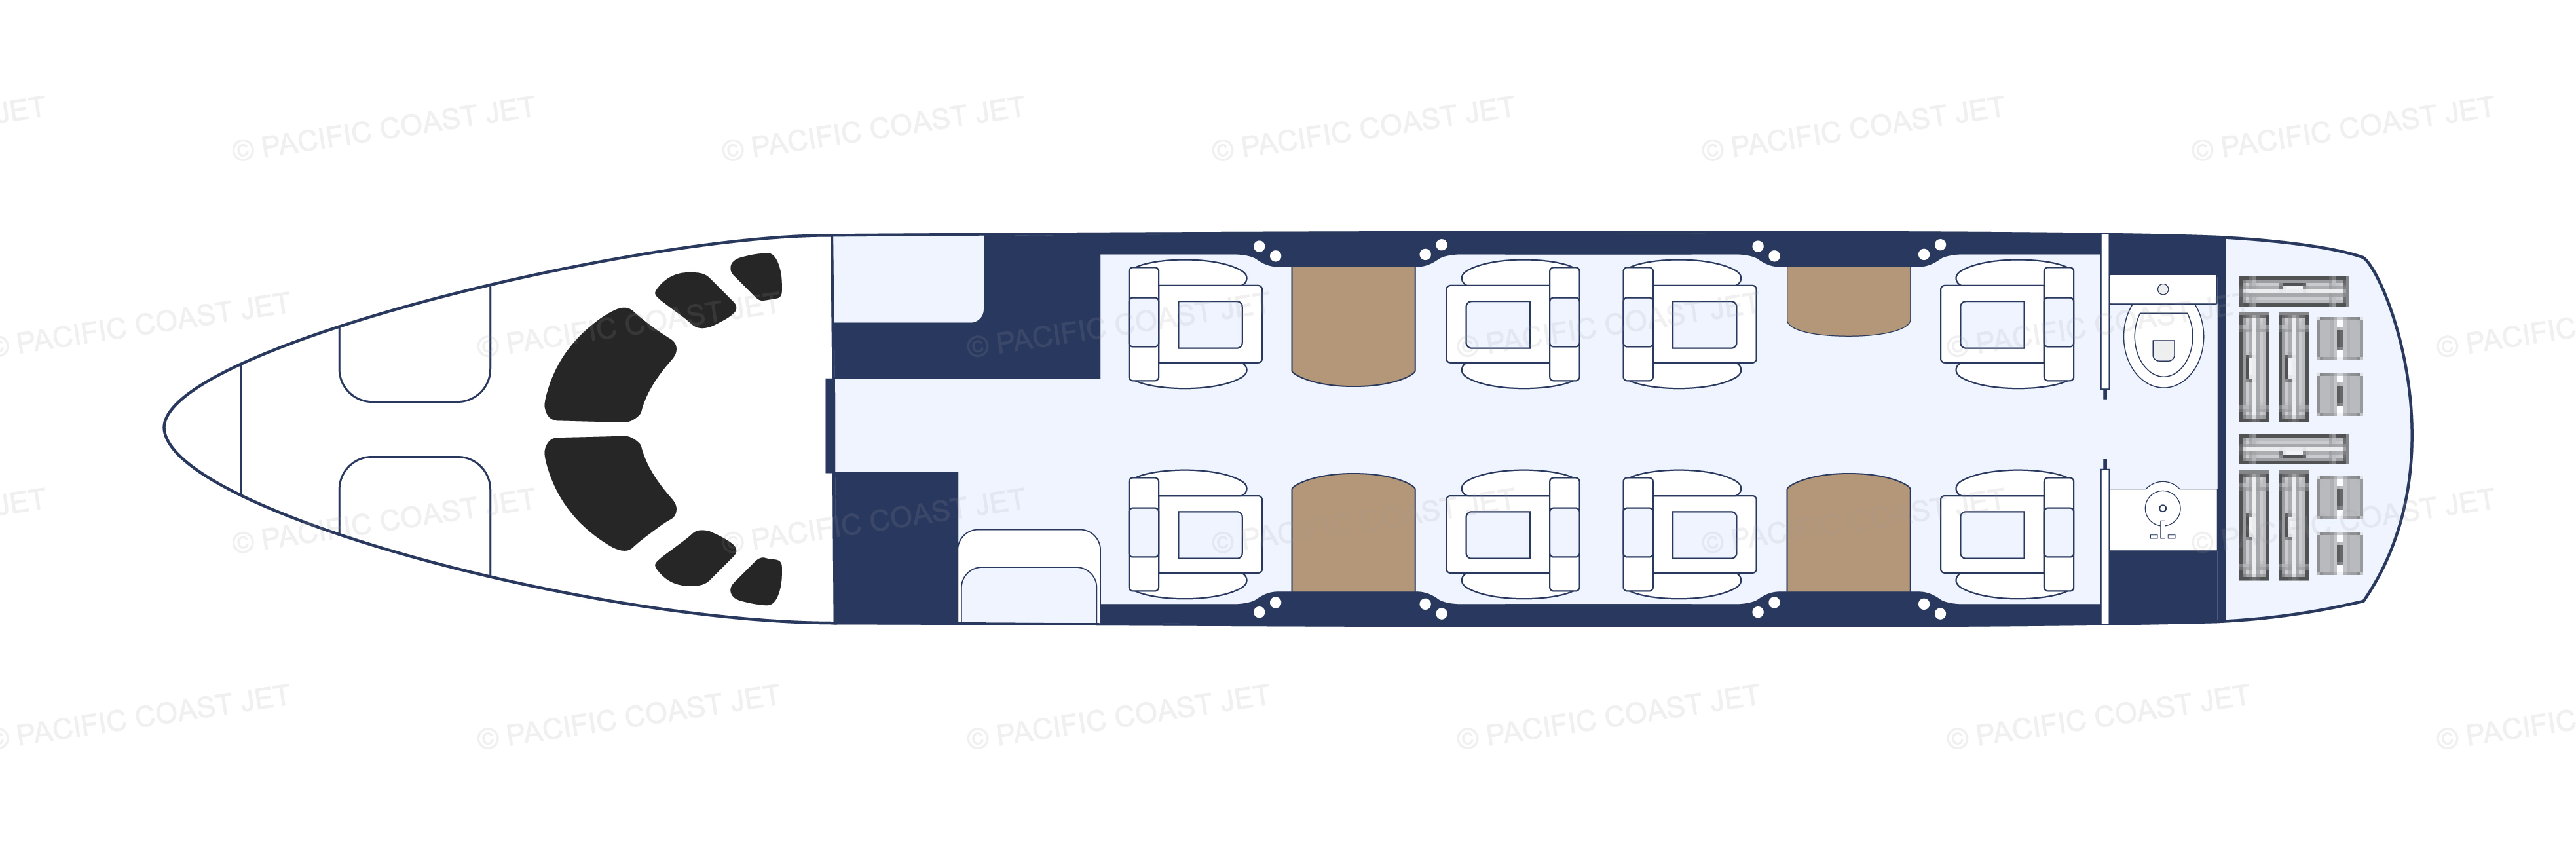 PCJ Floor Plan - Citation X